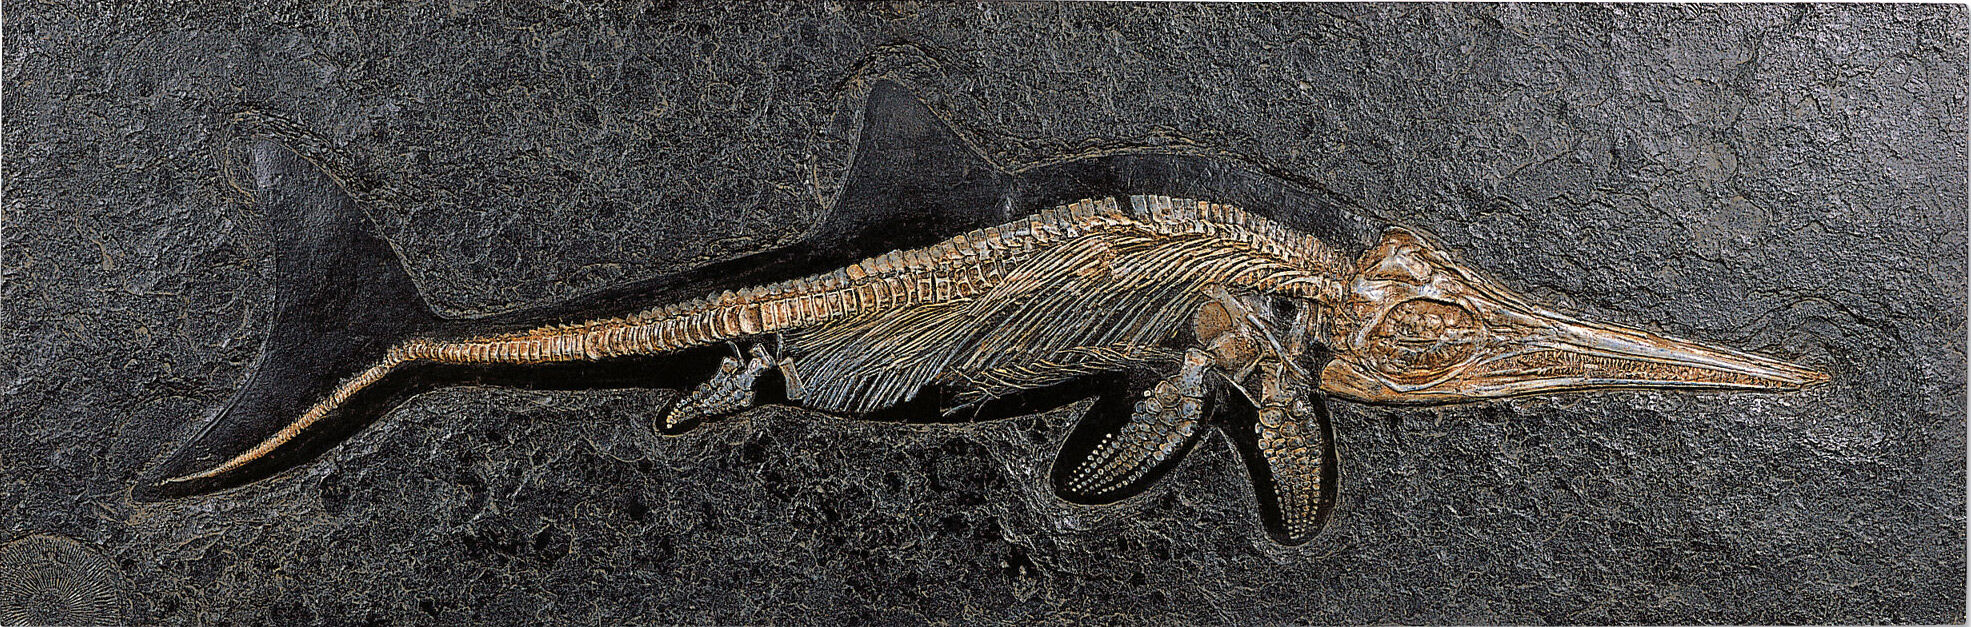 Ichthyosaure fossile